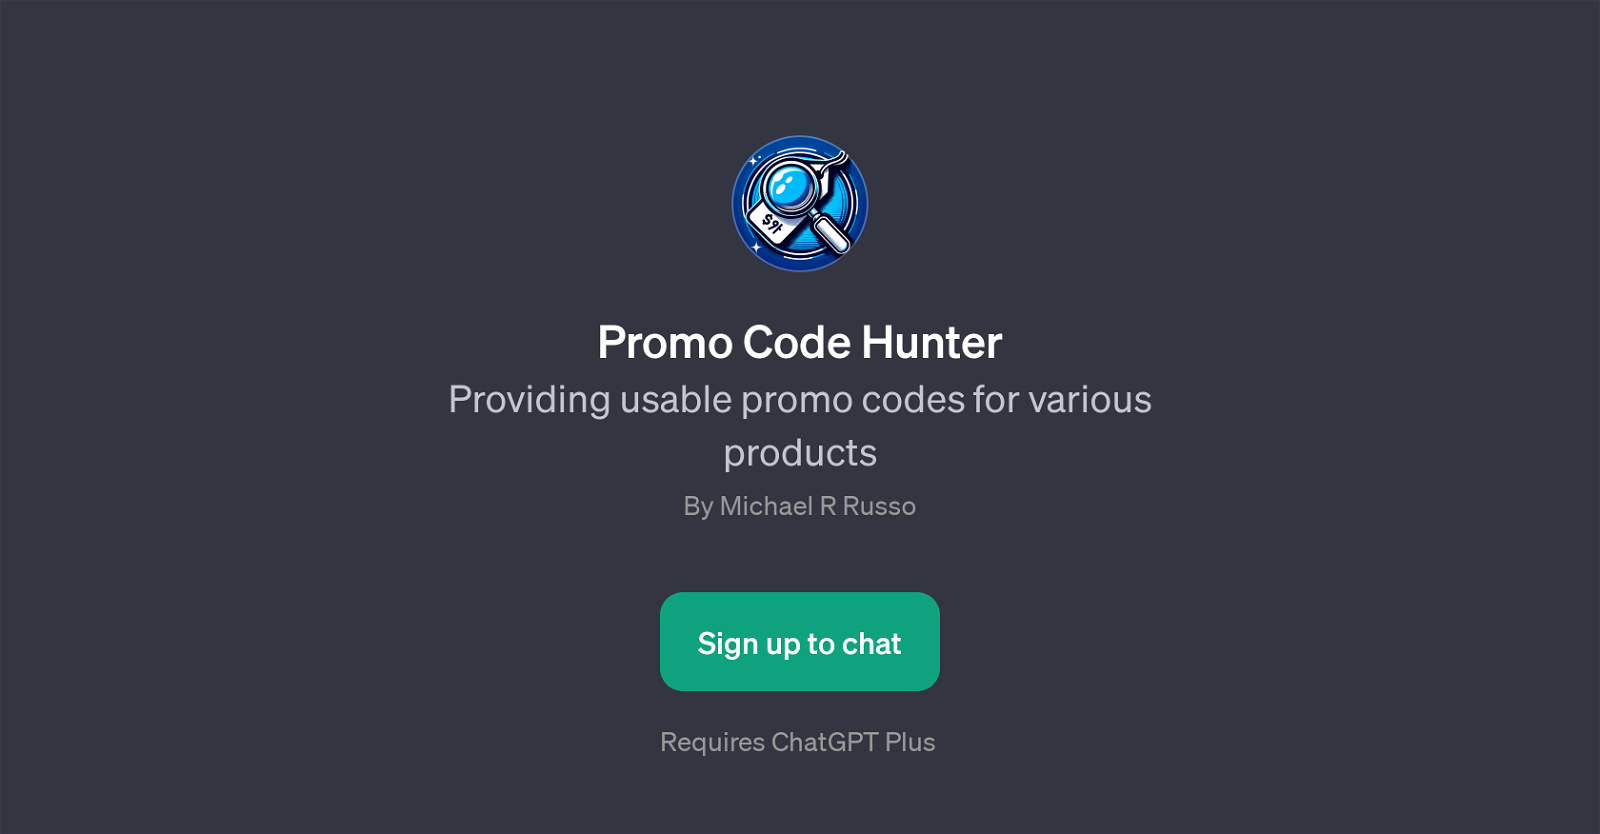 Promo Code Hunter website